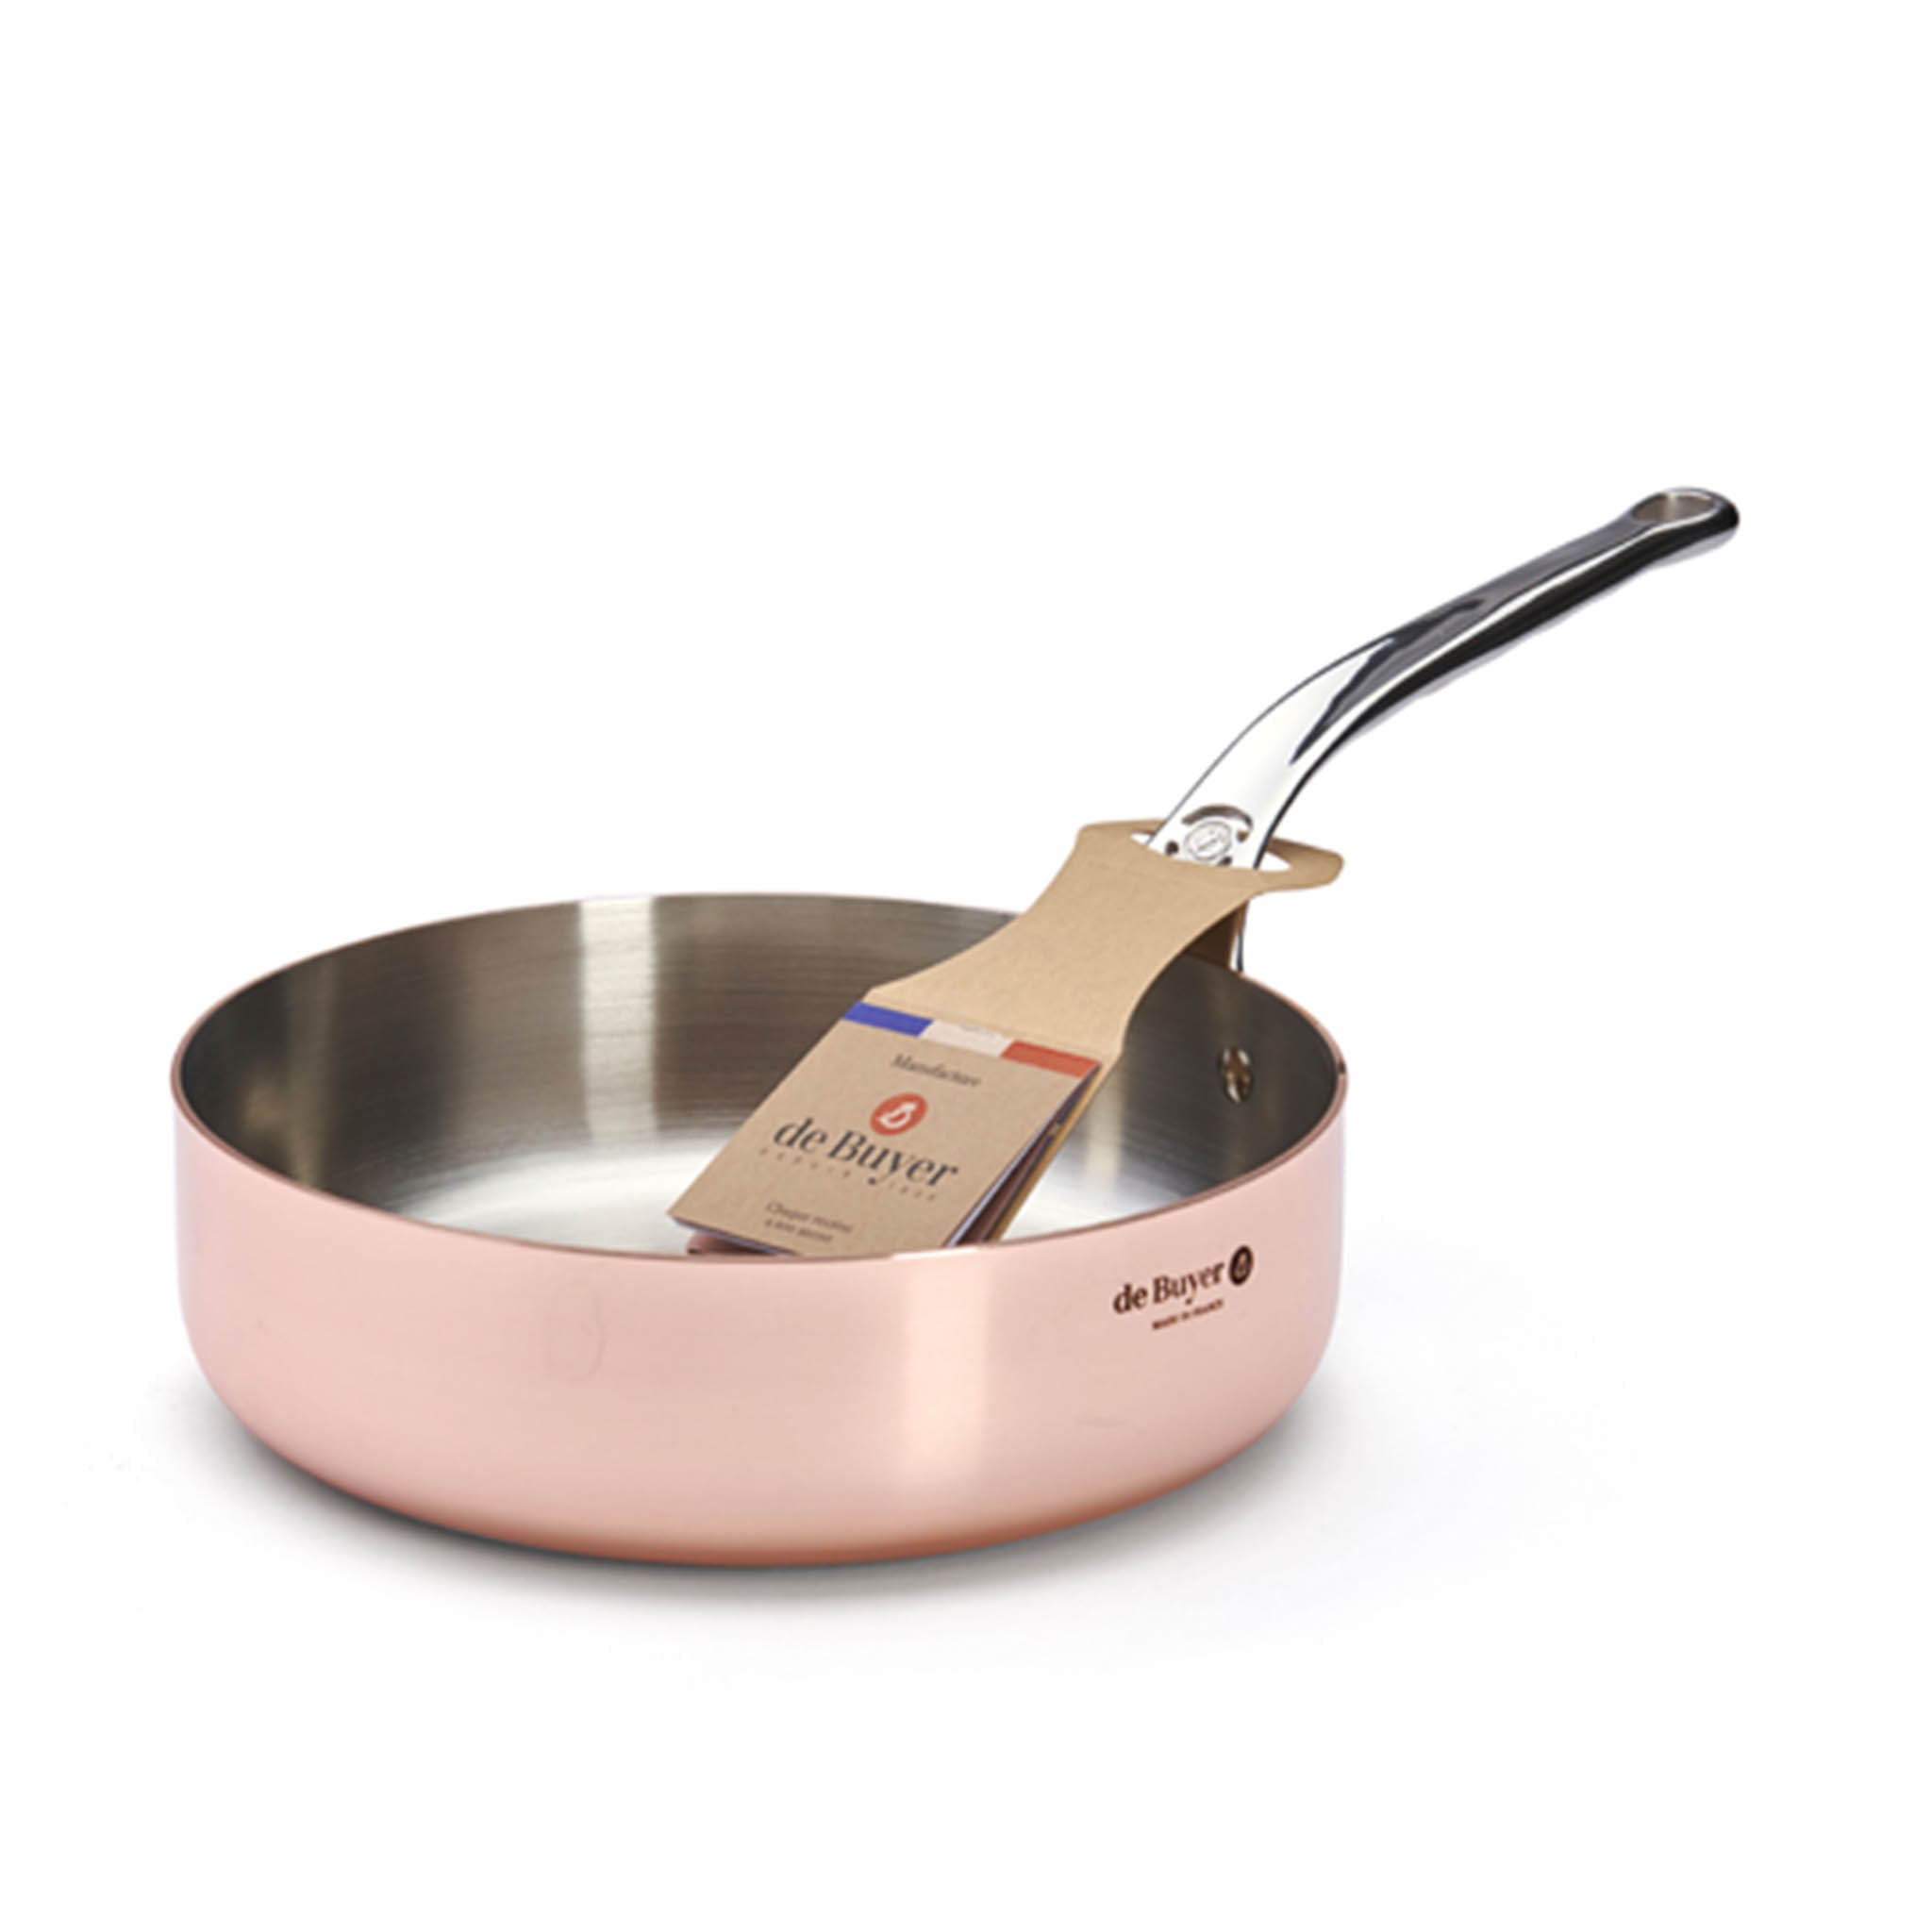 De Buyer Prima Matera Copper Saute Pan with Stainless Steel Handle, 24cm